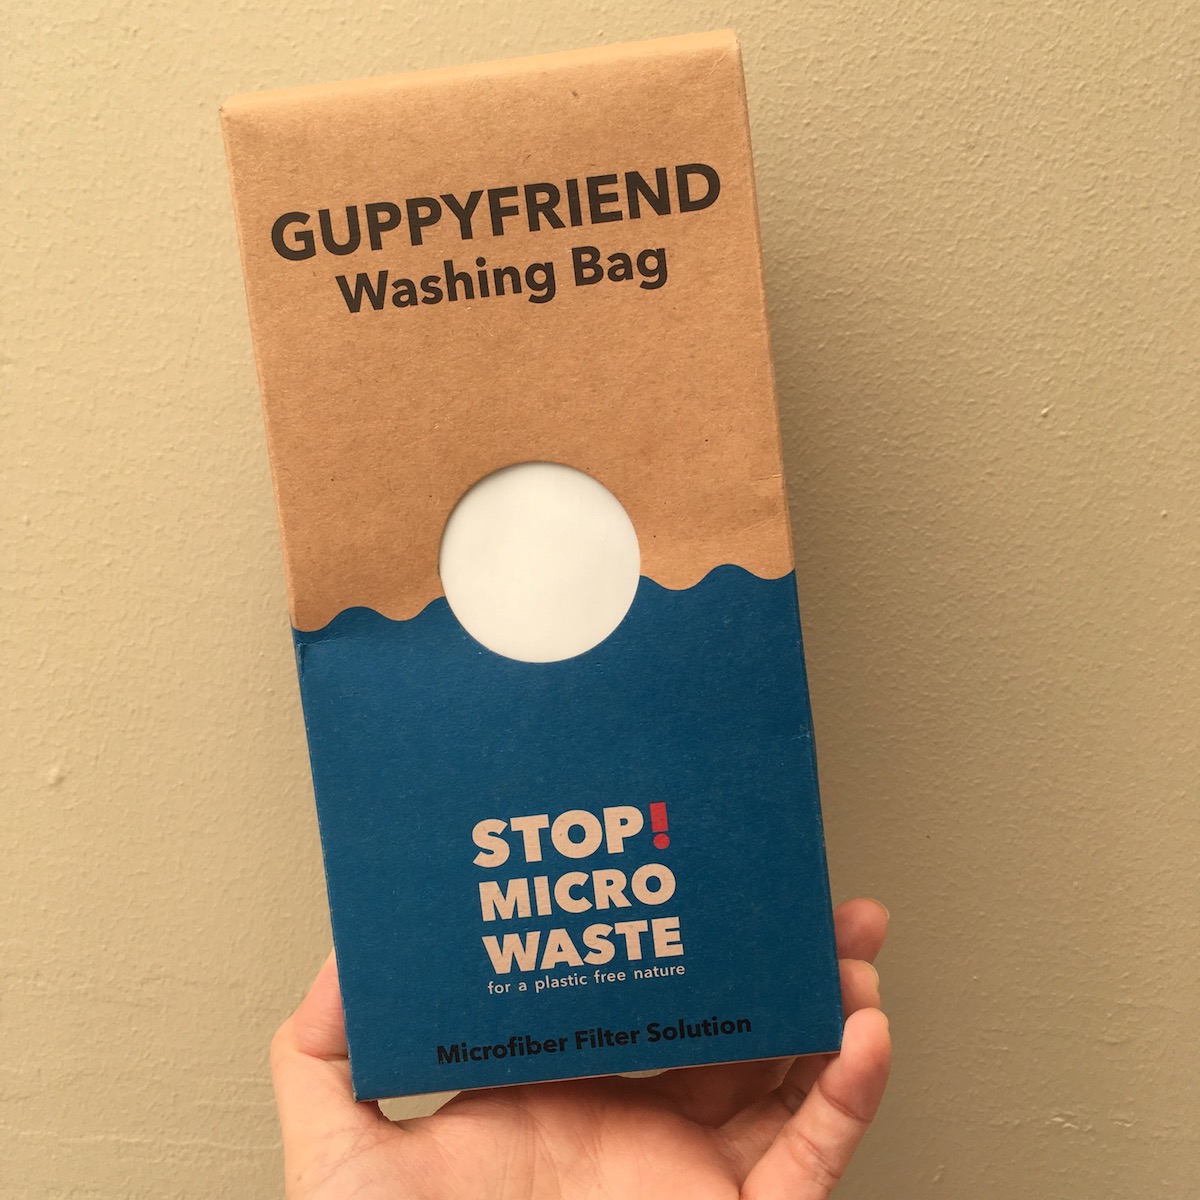 A hand holding a cardboard box for a Guppyfriend Washing bag.